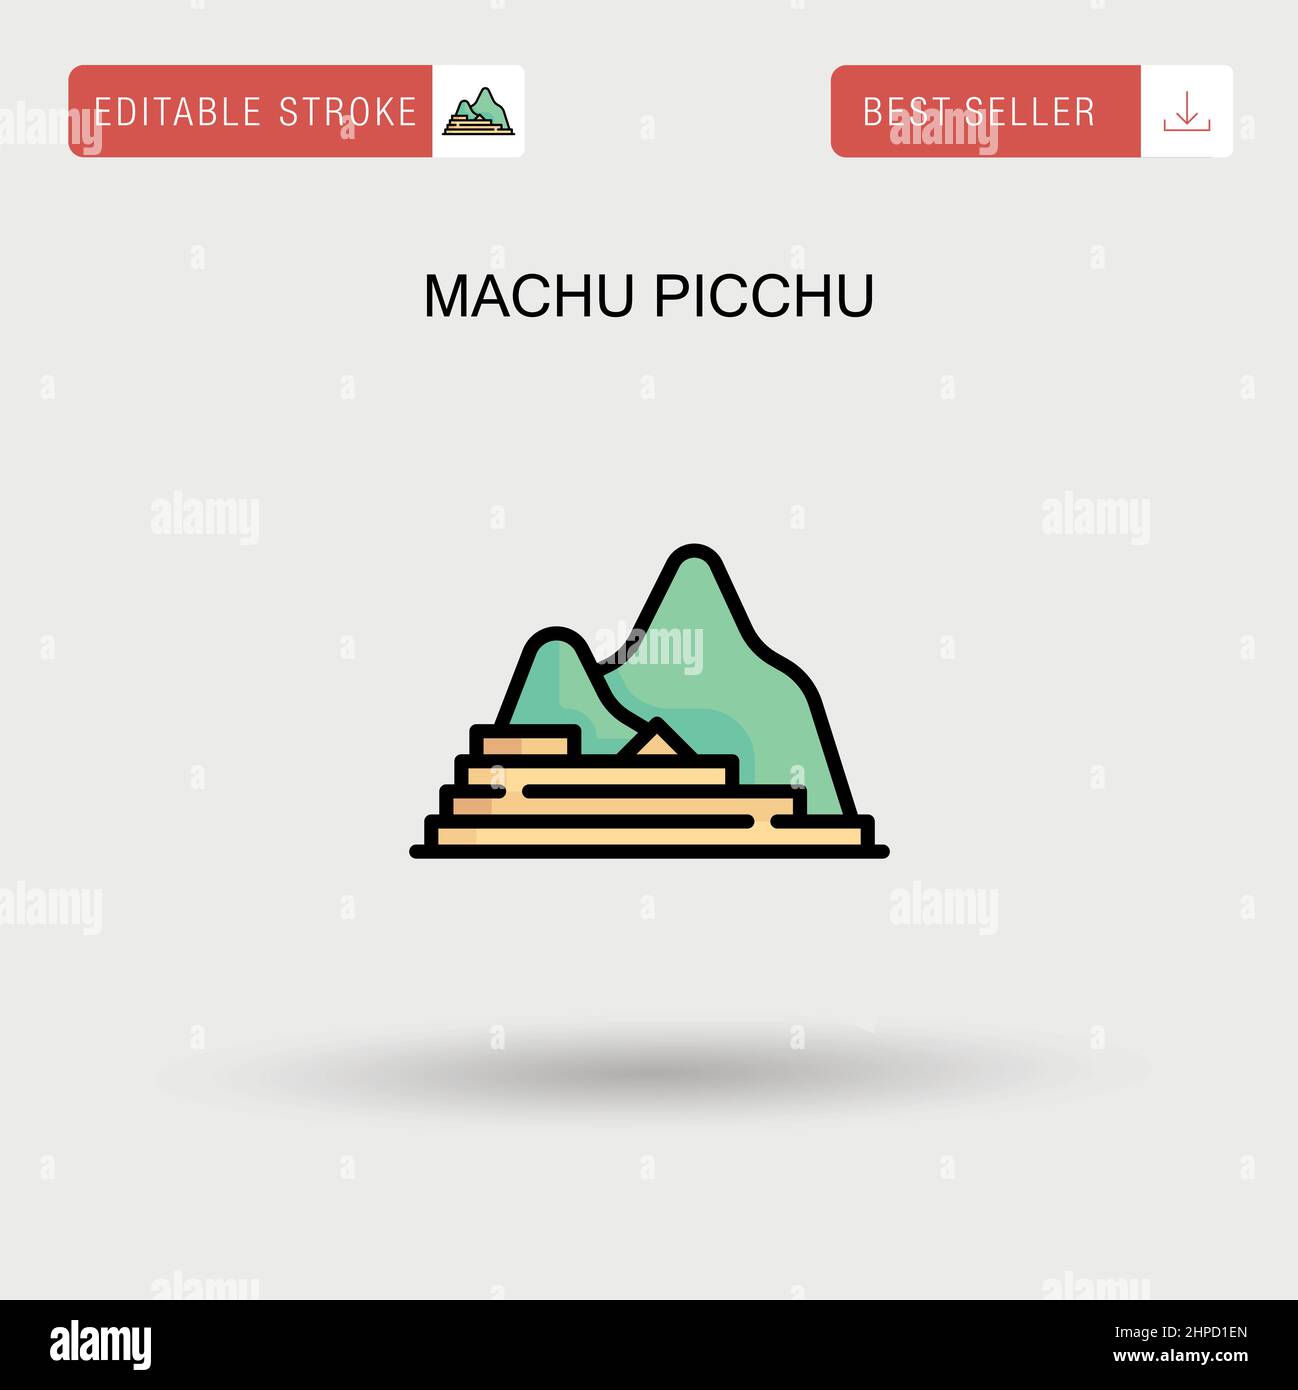 Machu picchu Simple vector icon. Stock Vector